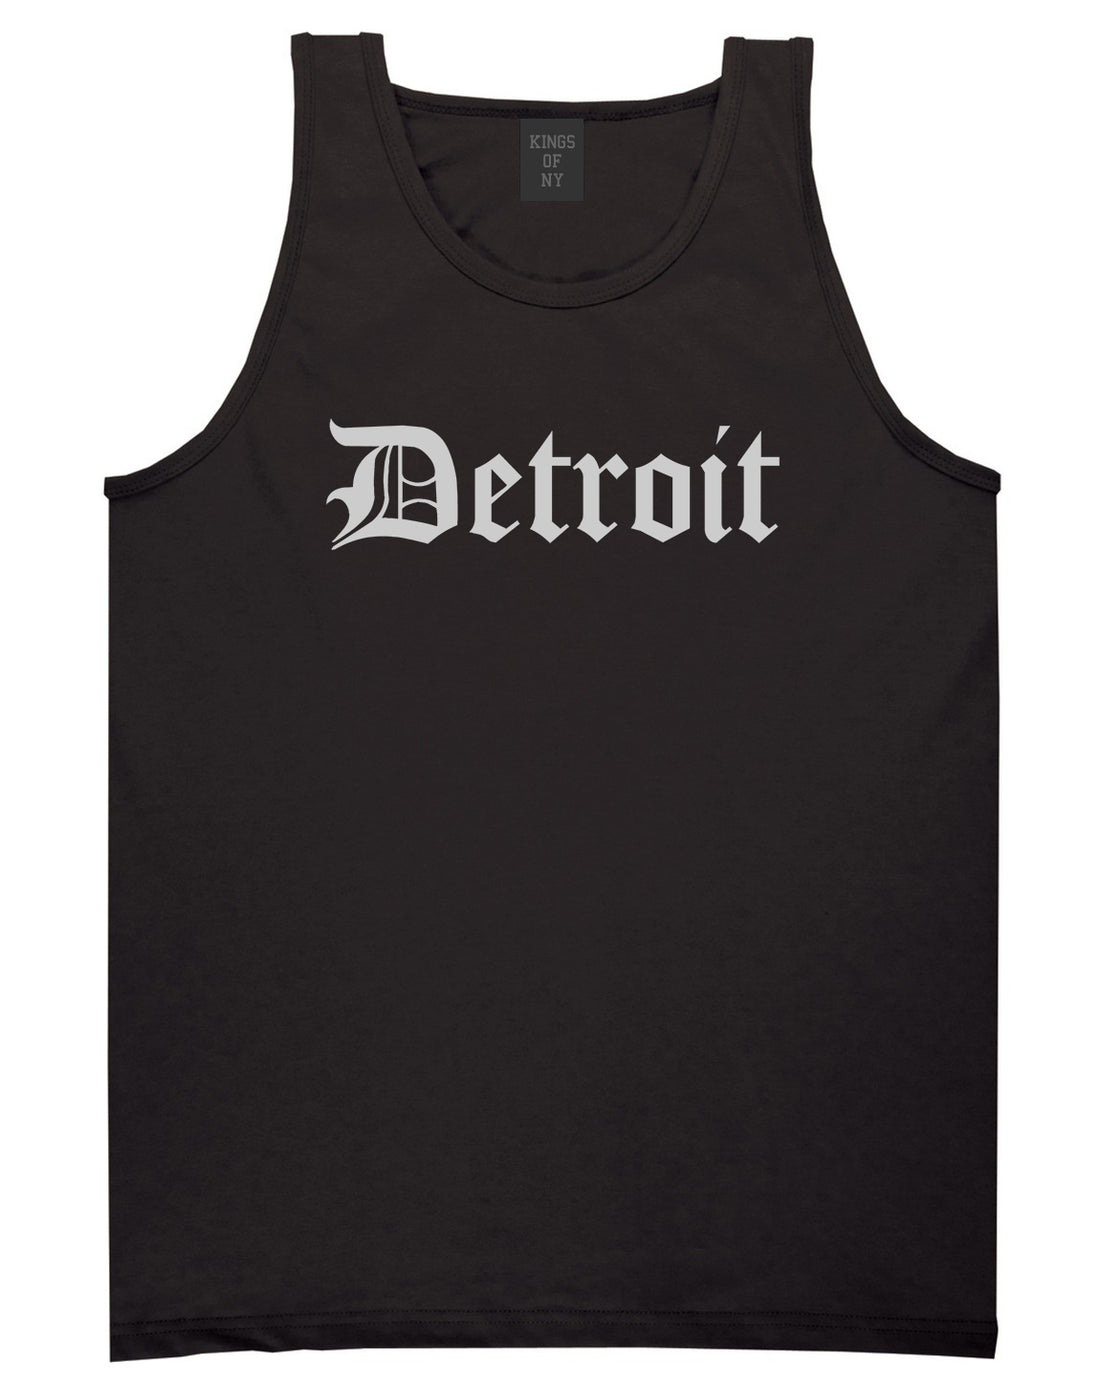 Detroit Old English Mens Tank Top T-Shirt Black